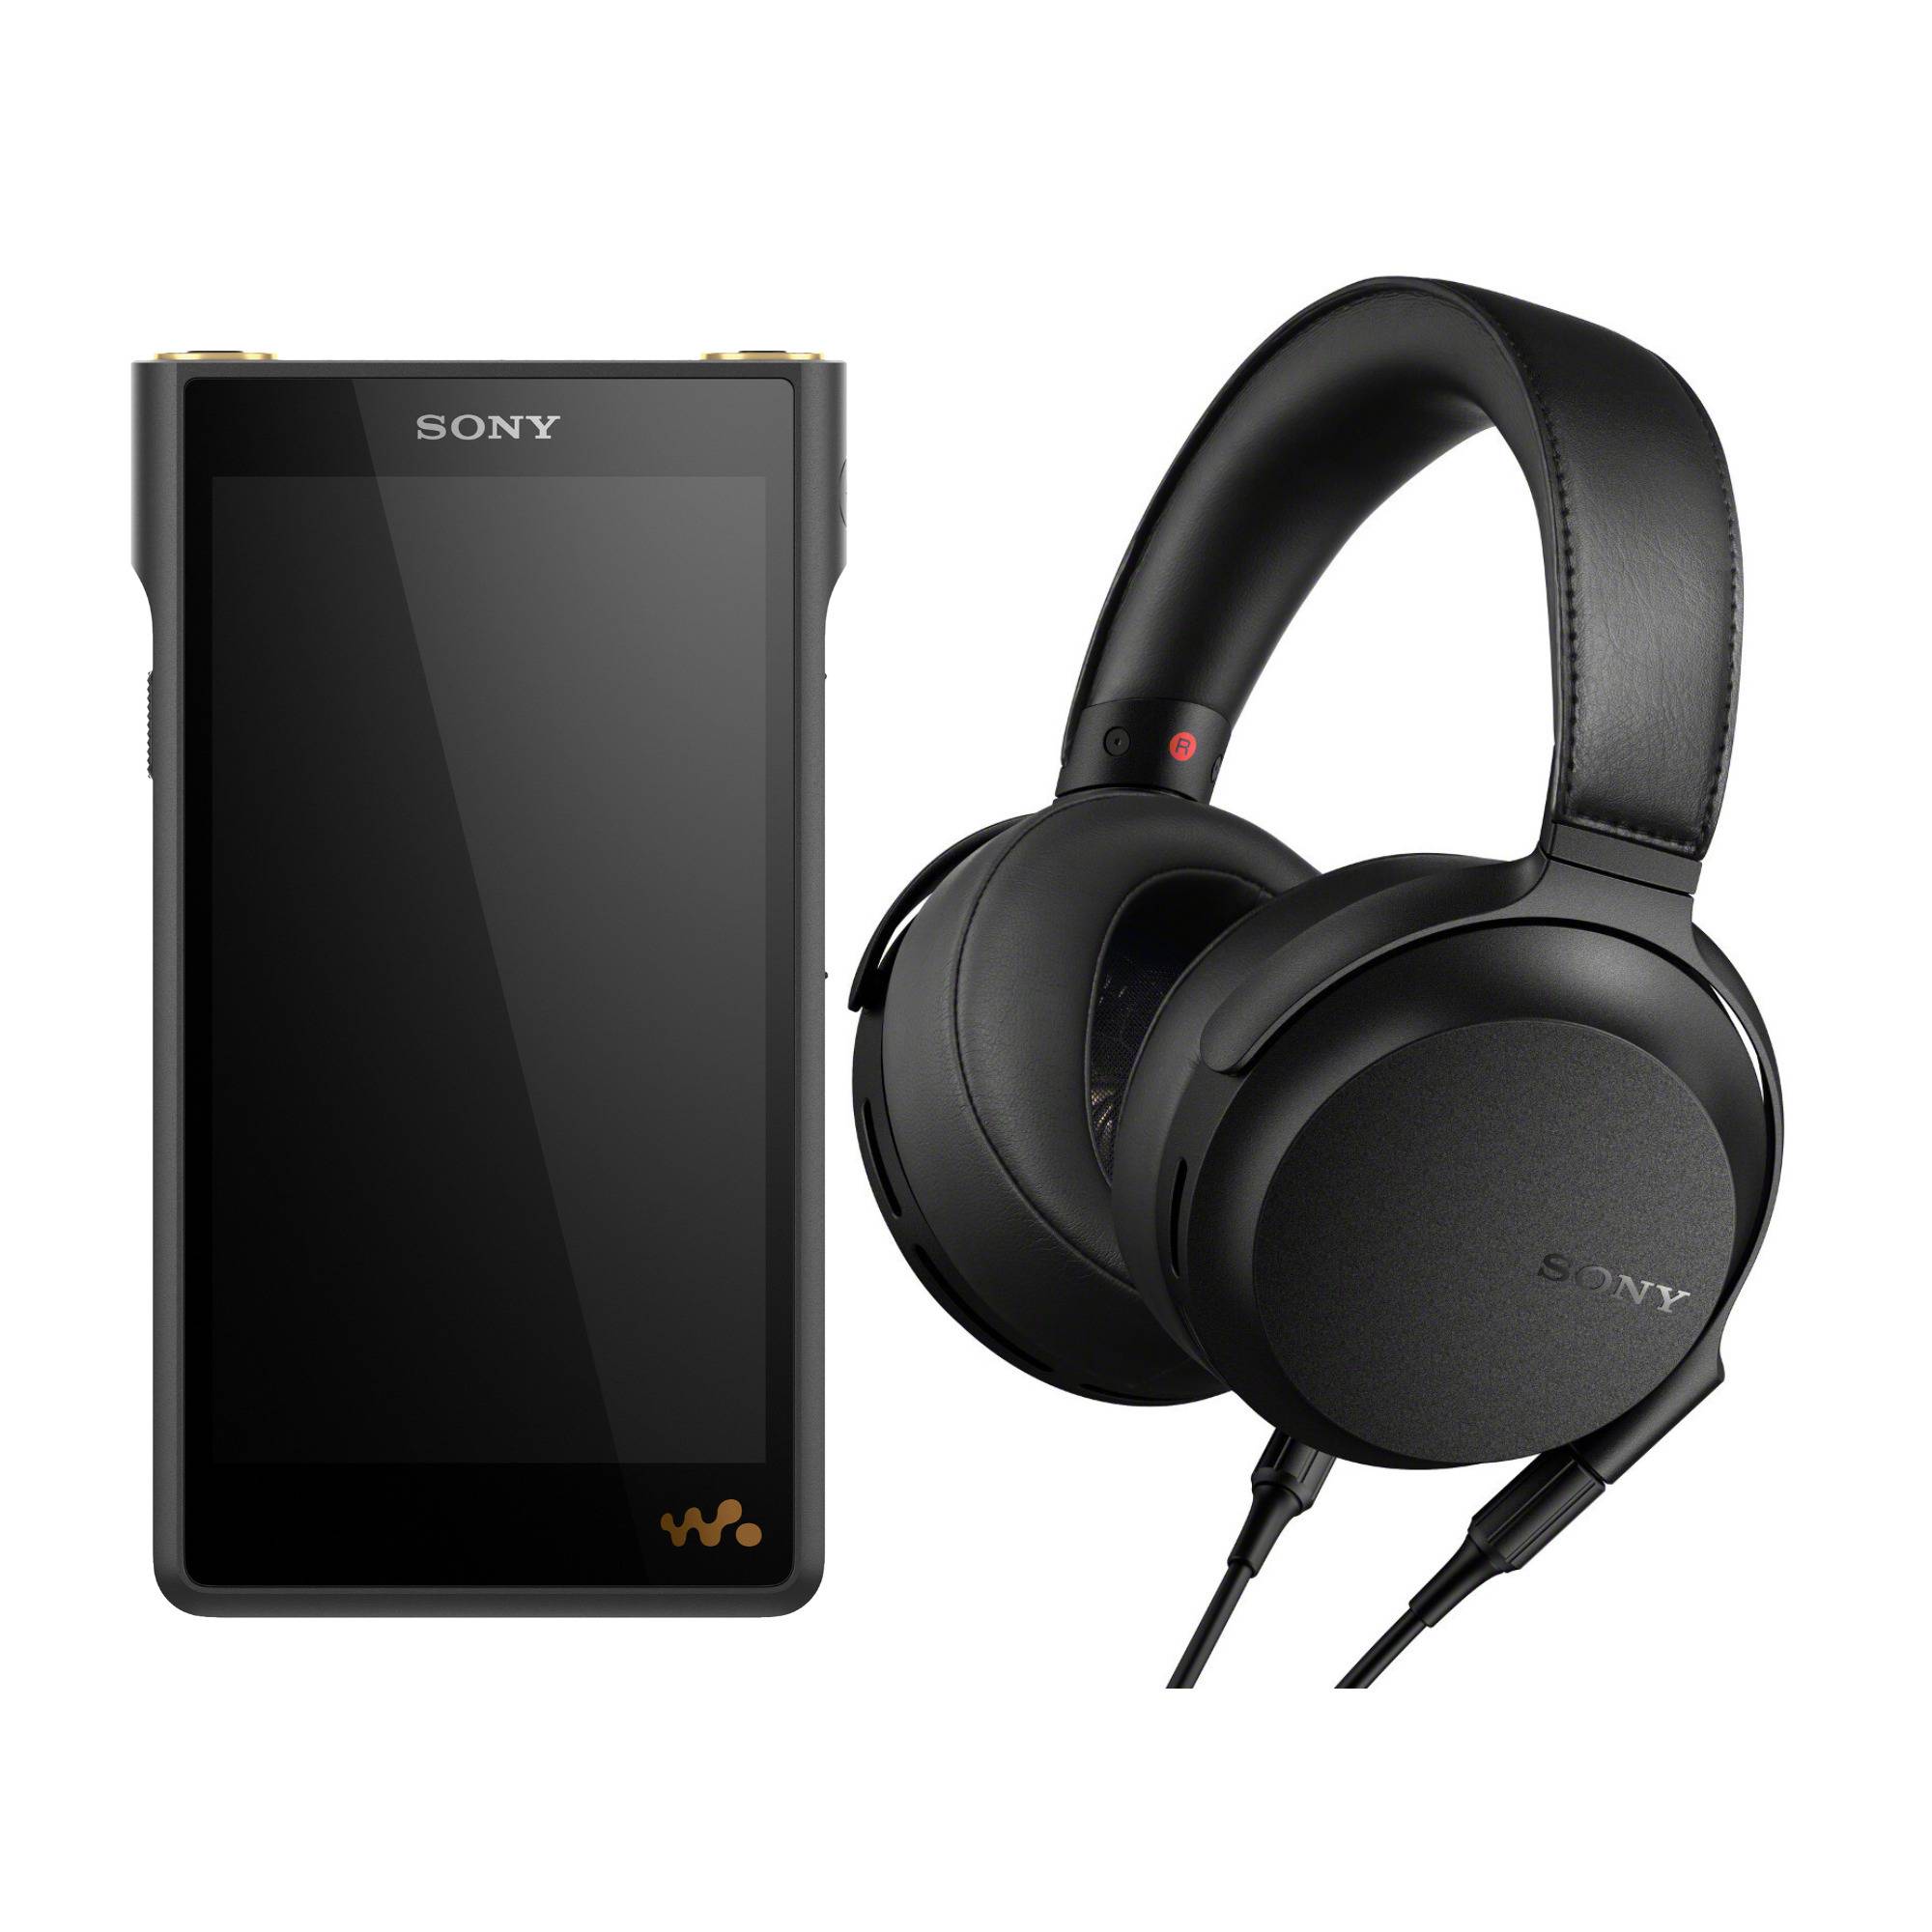 Sony NW-WM1AM2 Walkman Digital Music Player with Sony MDR-Z7M2 Hi-Res Stereo Overhead Headphones